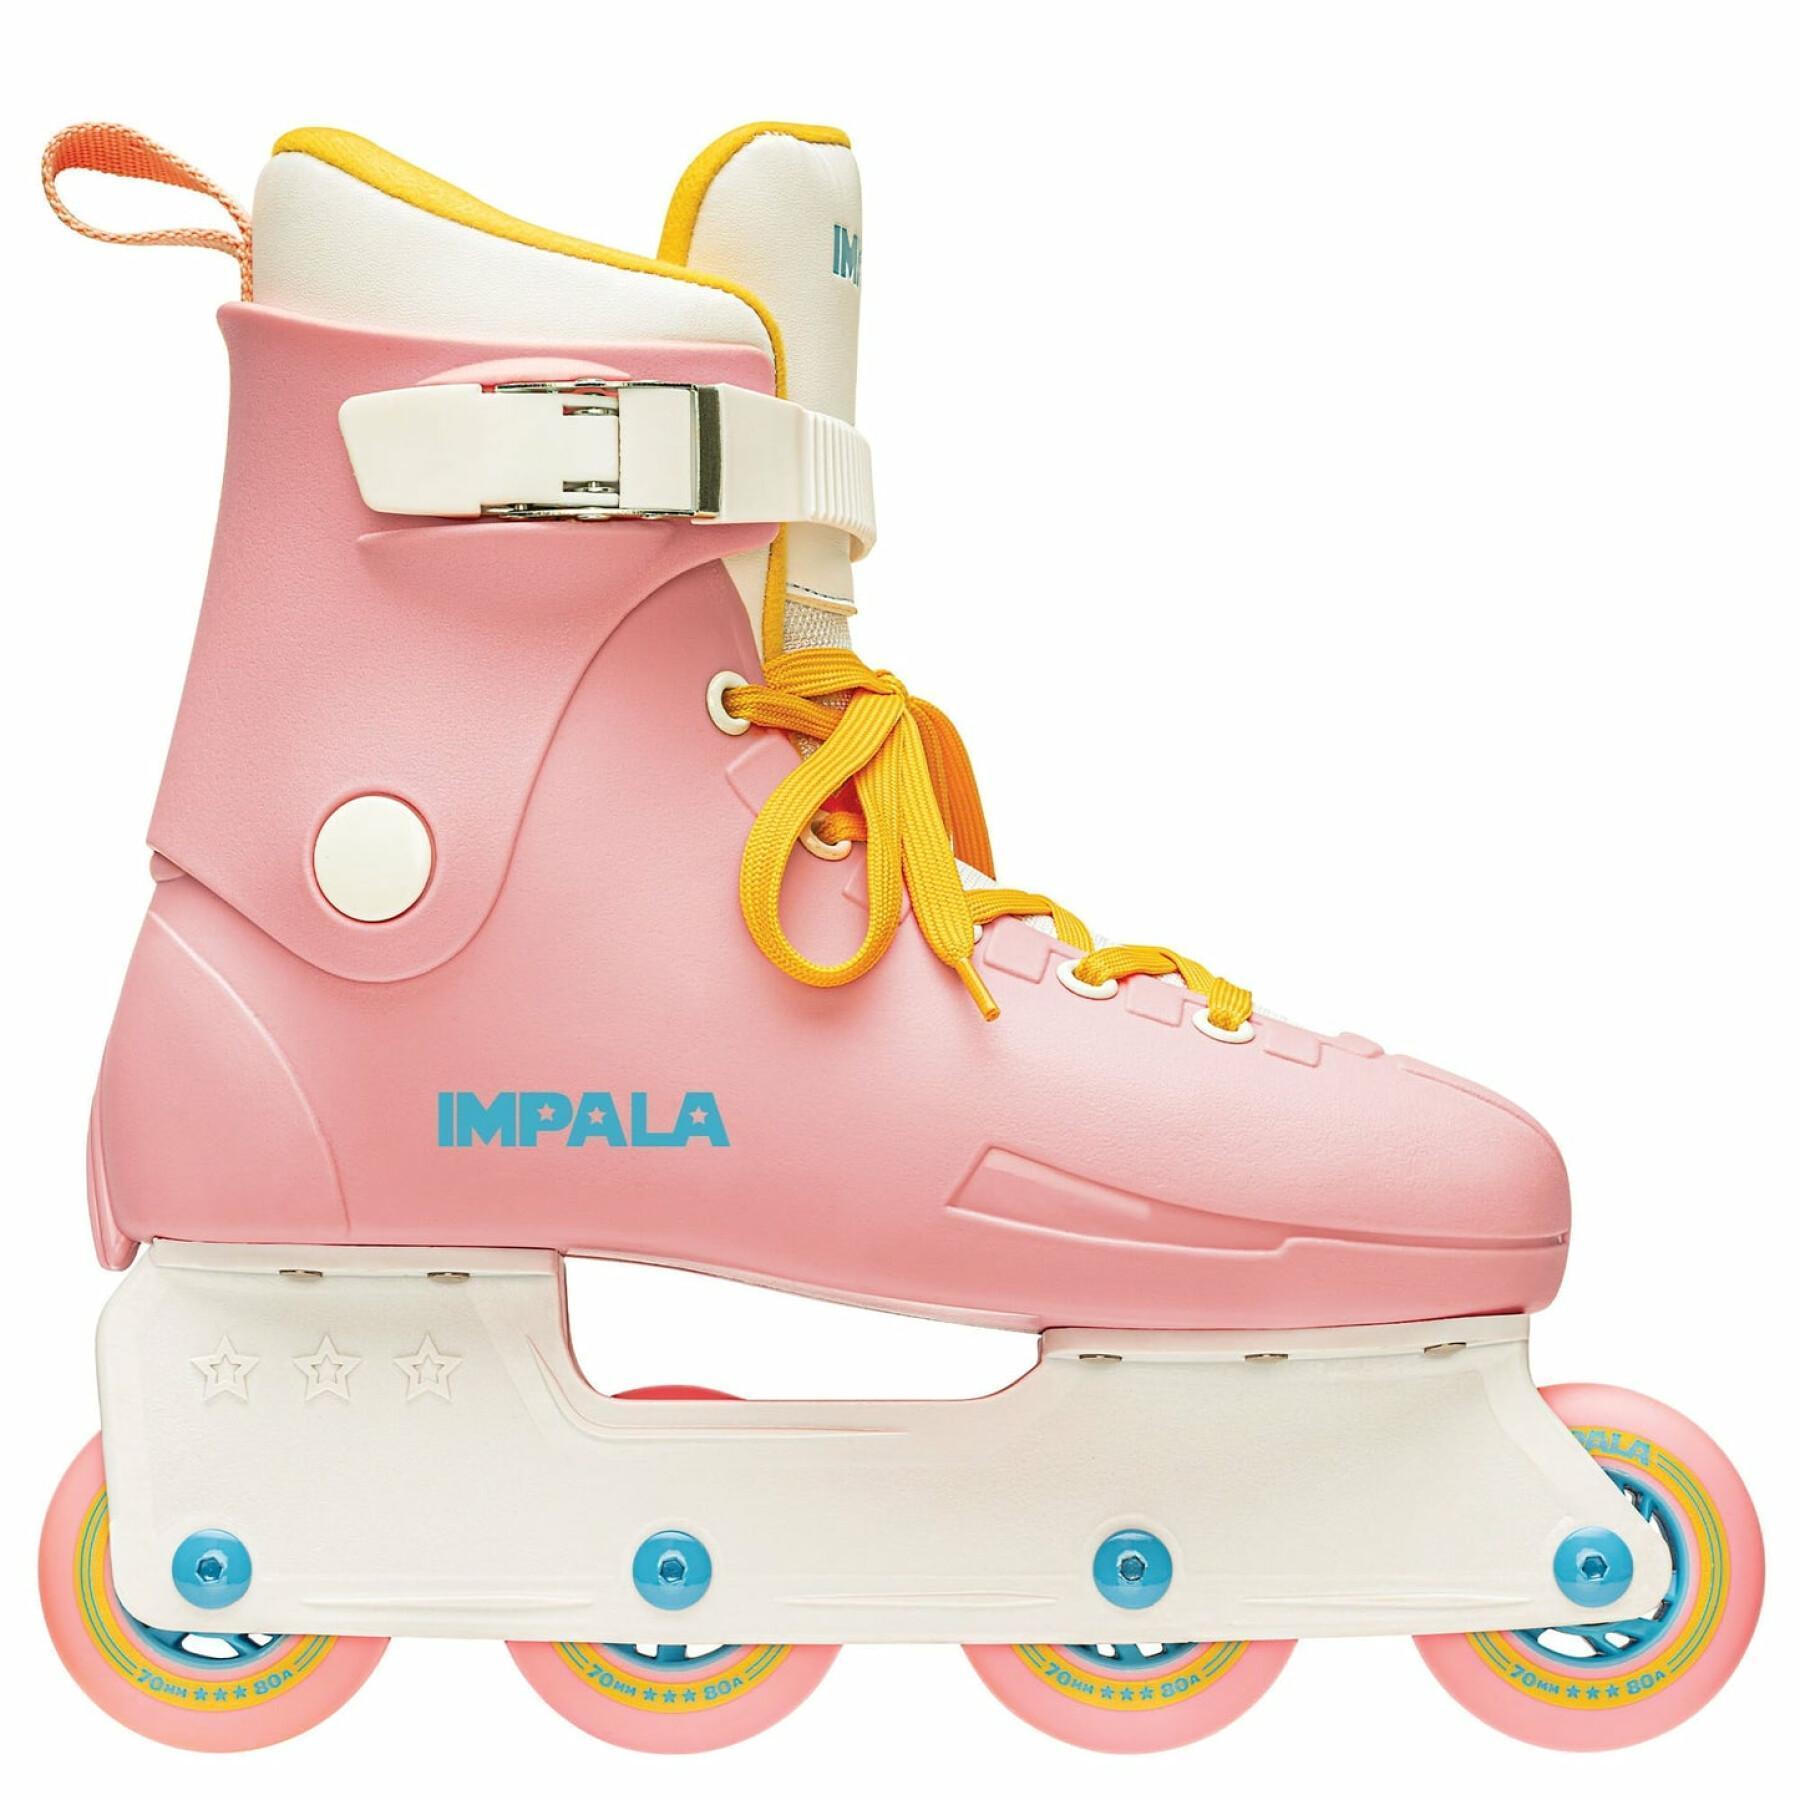 Sapatos Impala Lightspeed Inline Skate